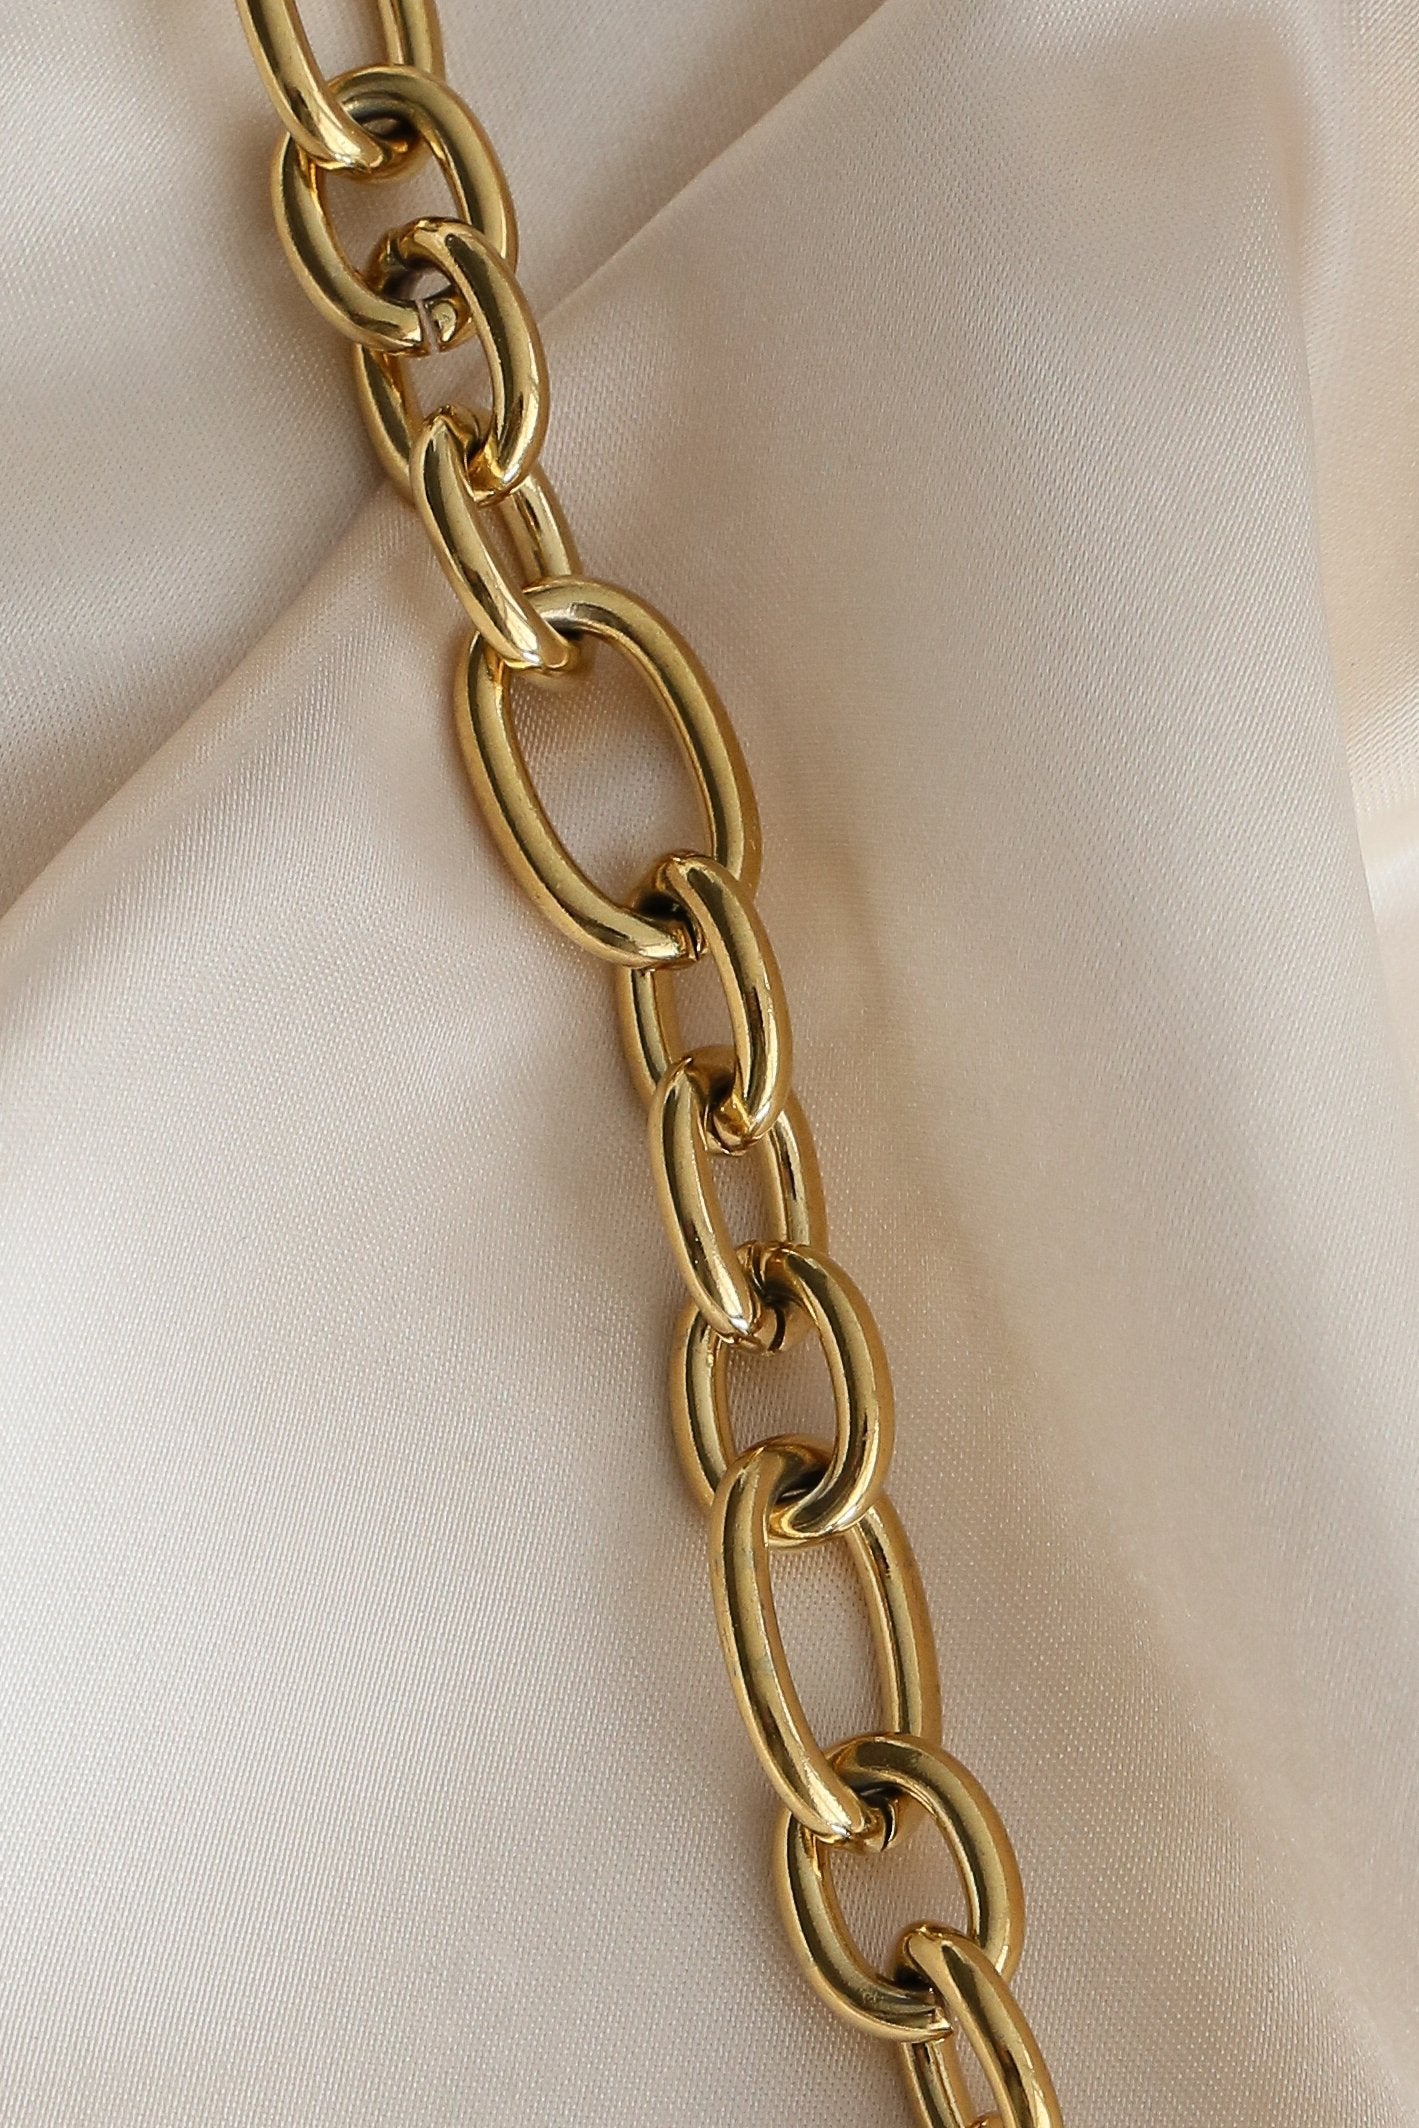 Sunlight Bracelet - Boutique Minimaliste has waterproof, durable, elegant and vintage inspired jewelry